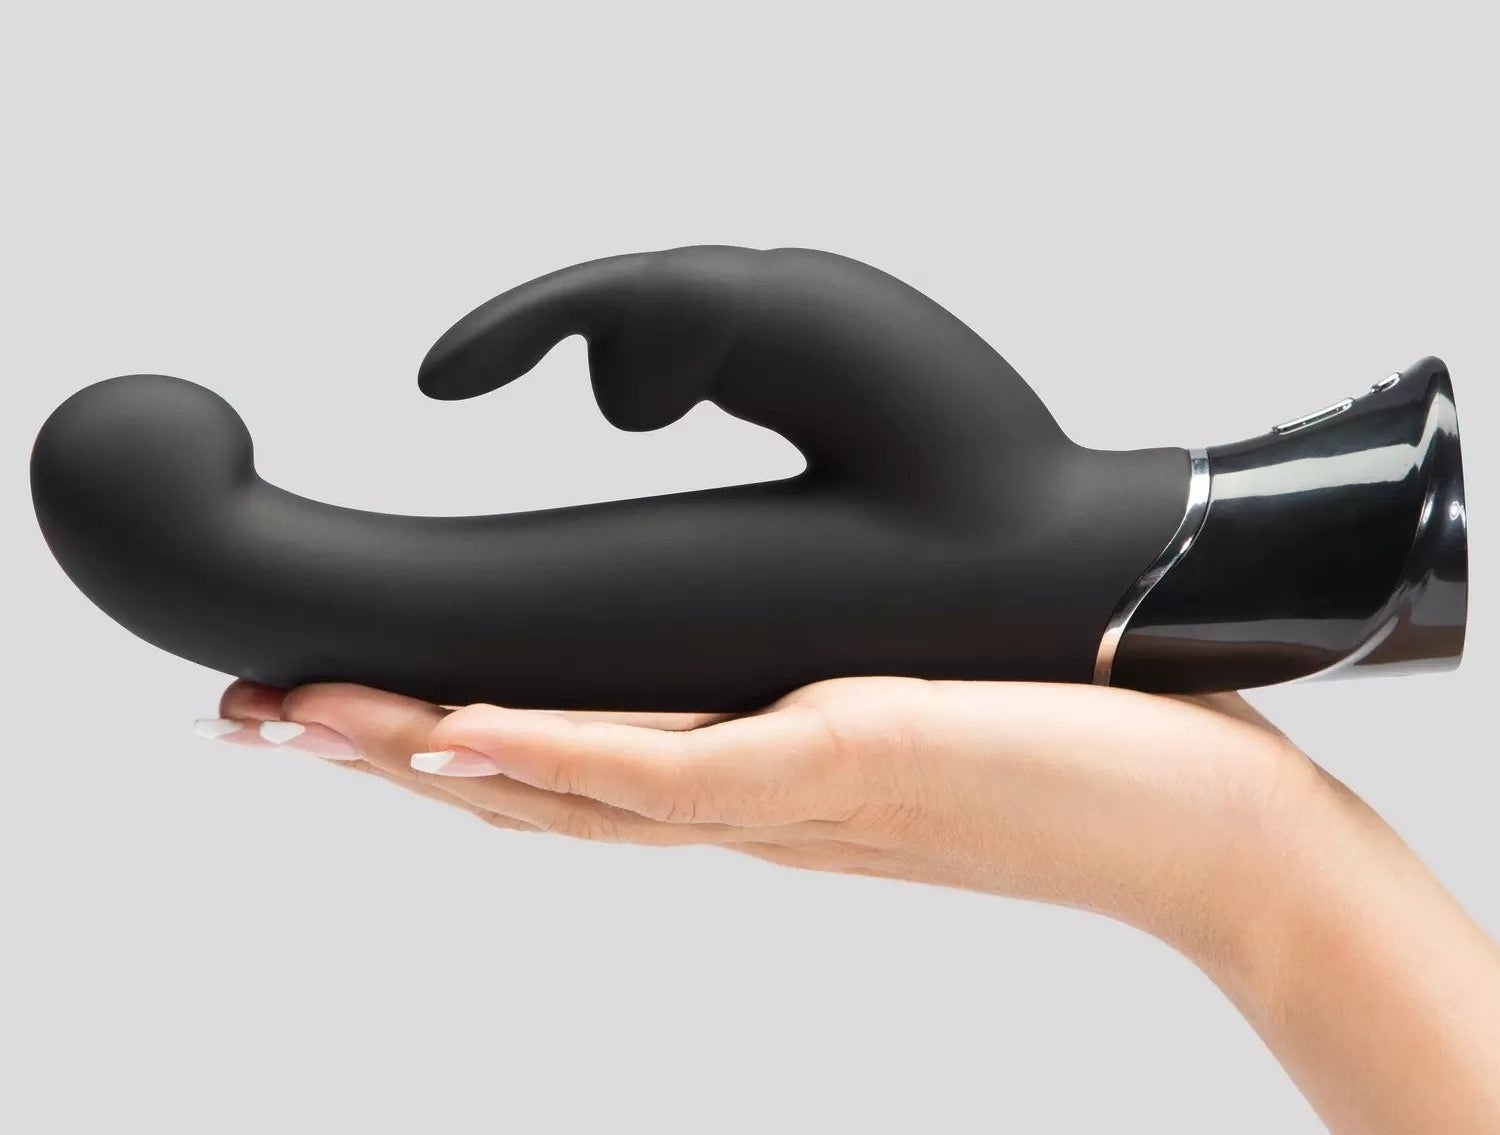 Model holding black rabbit vibrator